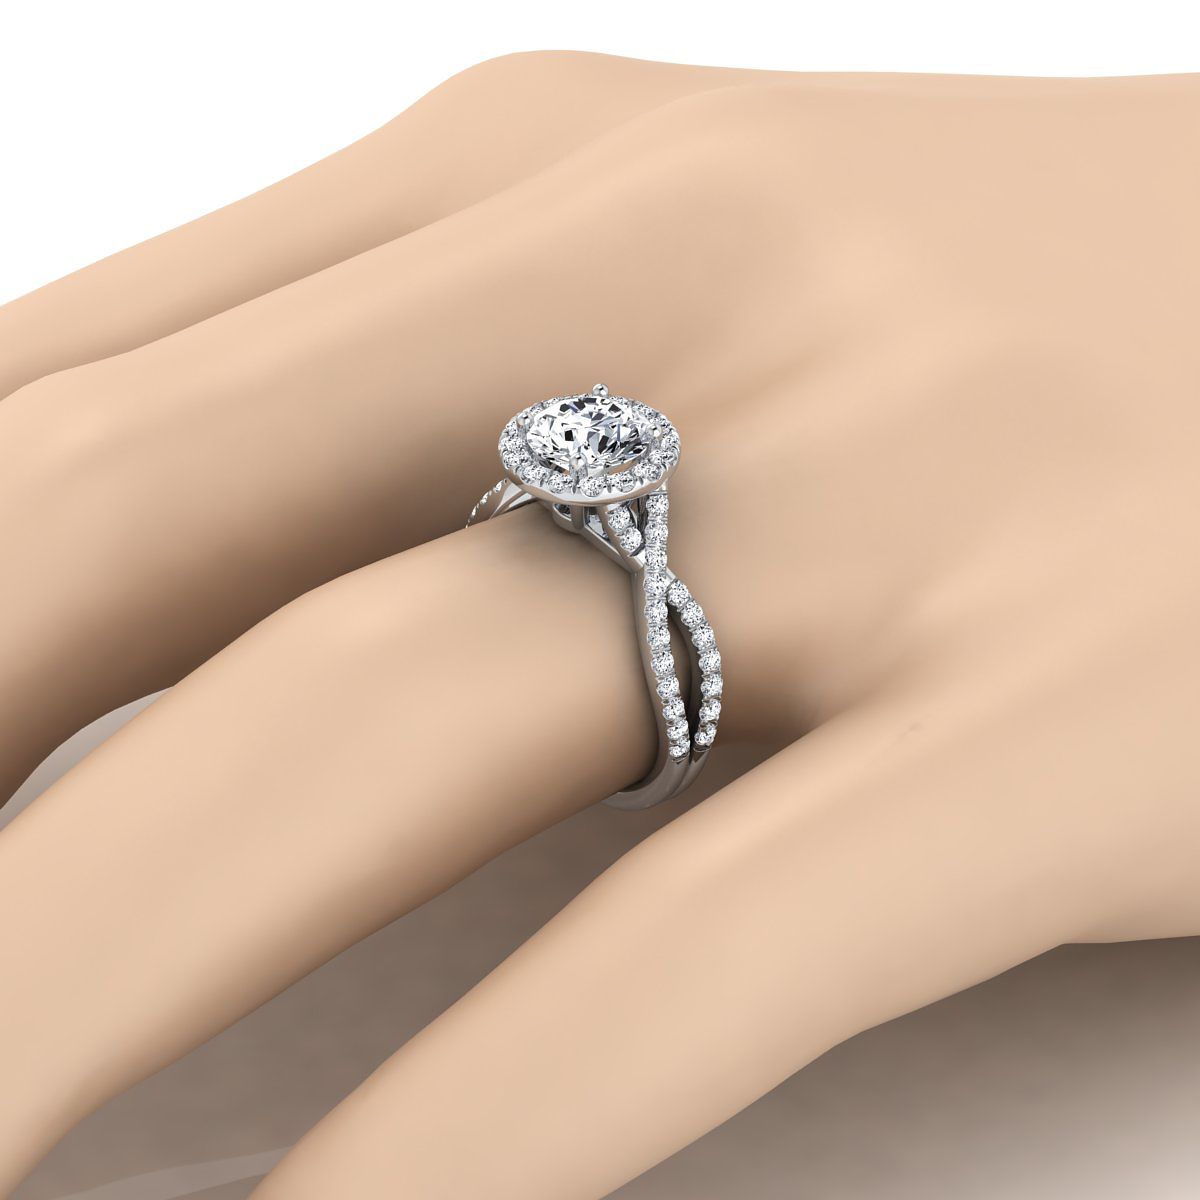 18K White Gold Round Brilliant Swiss Blue Topaz  Twisted Scalloped Pavé Diamonds Halo Engagement Ring -1/2ctw